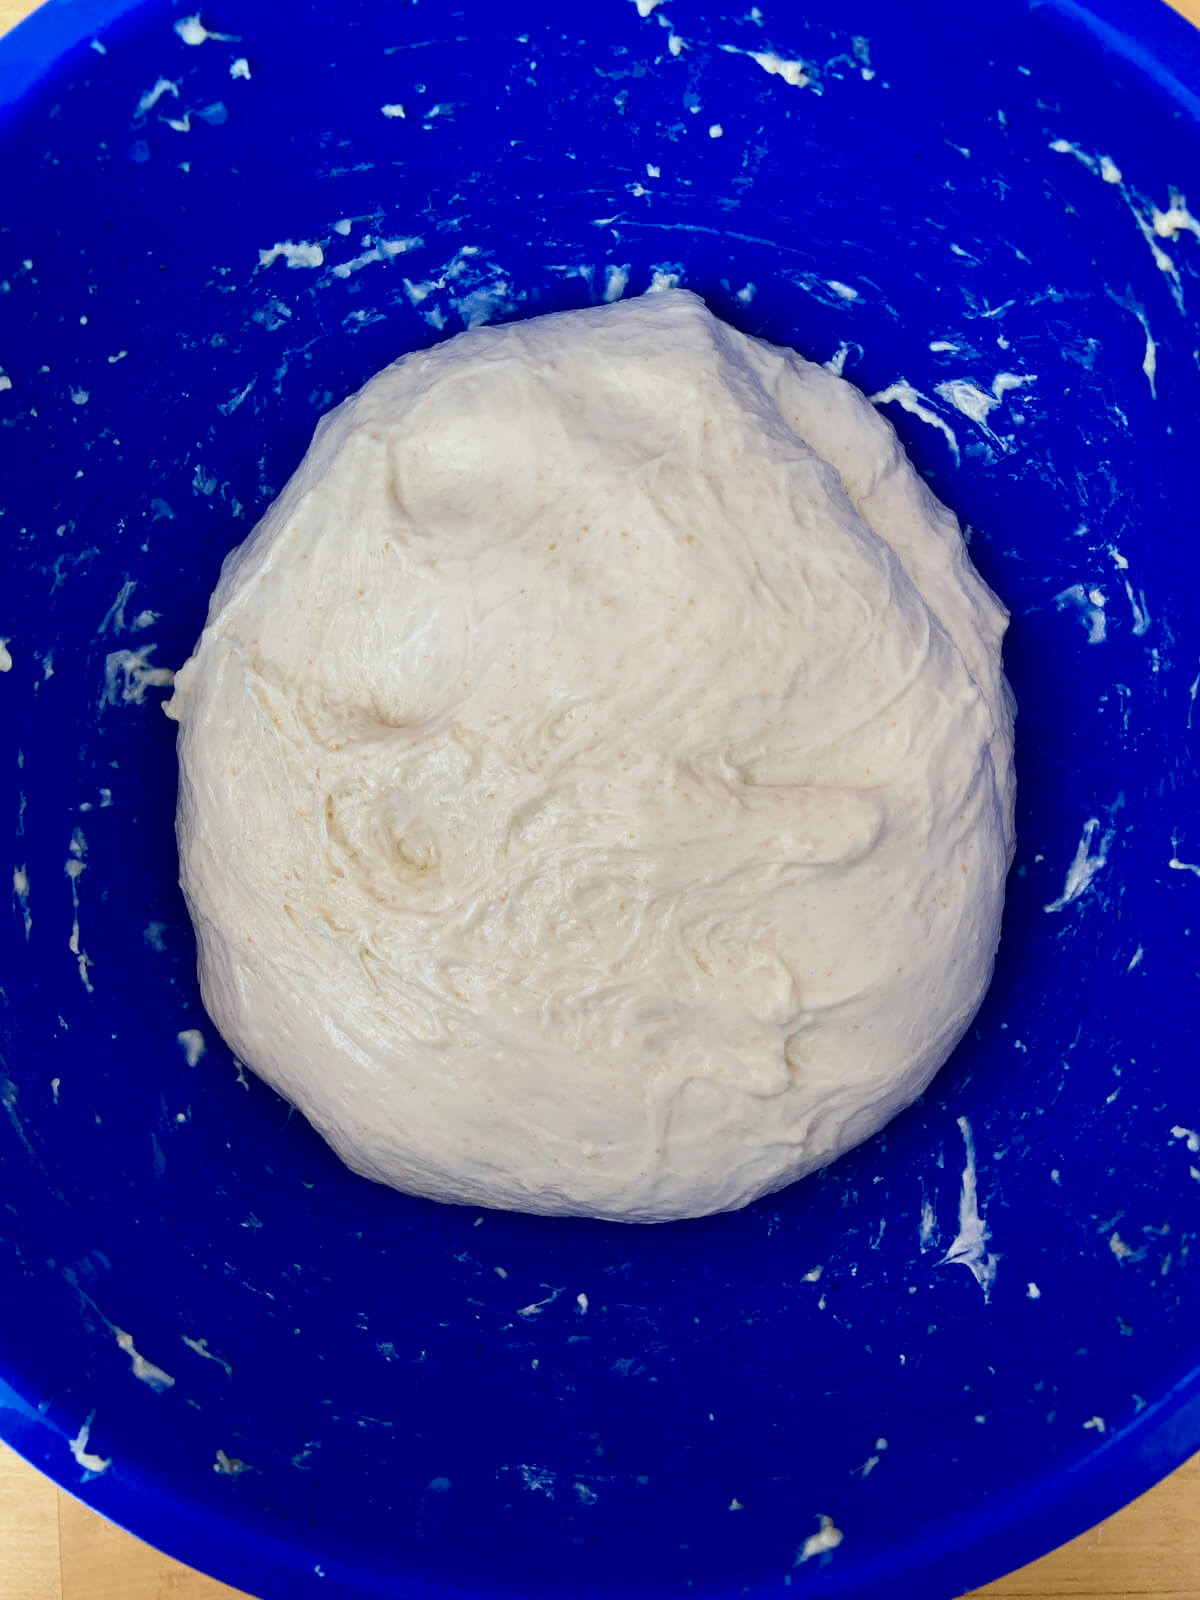 The dough before bulk fermenting.